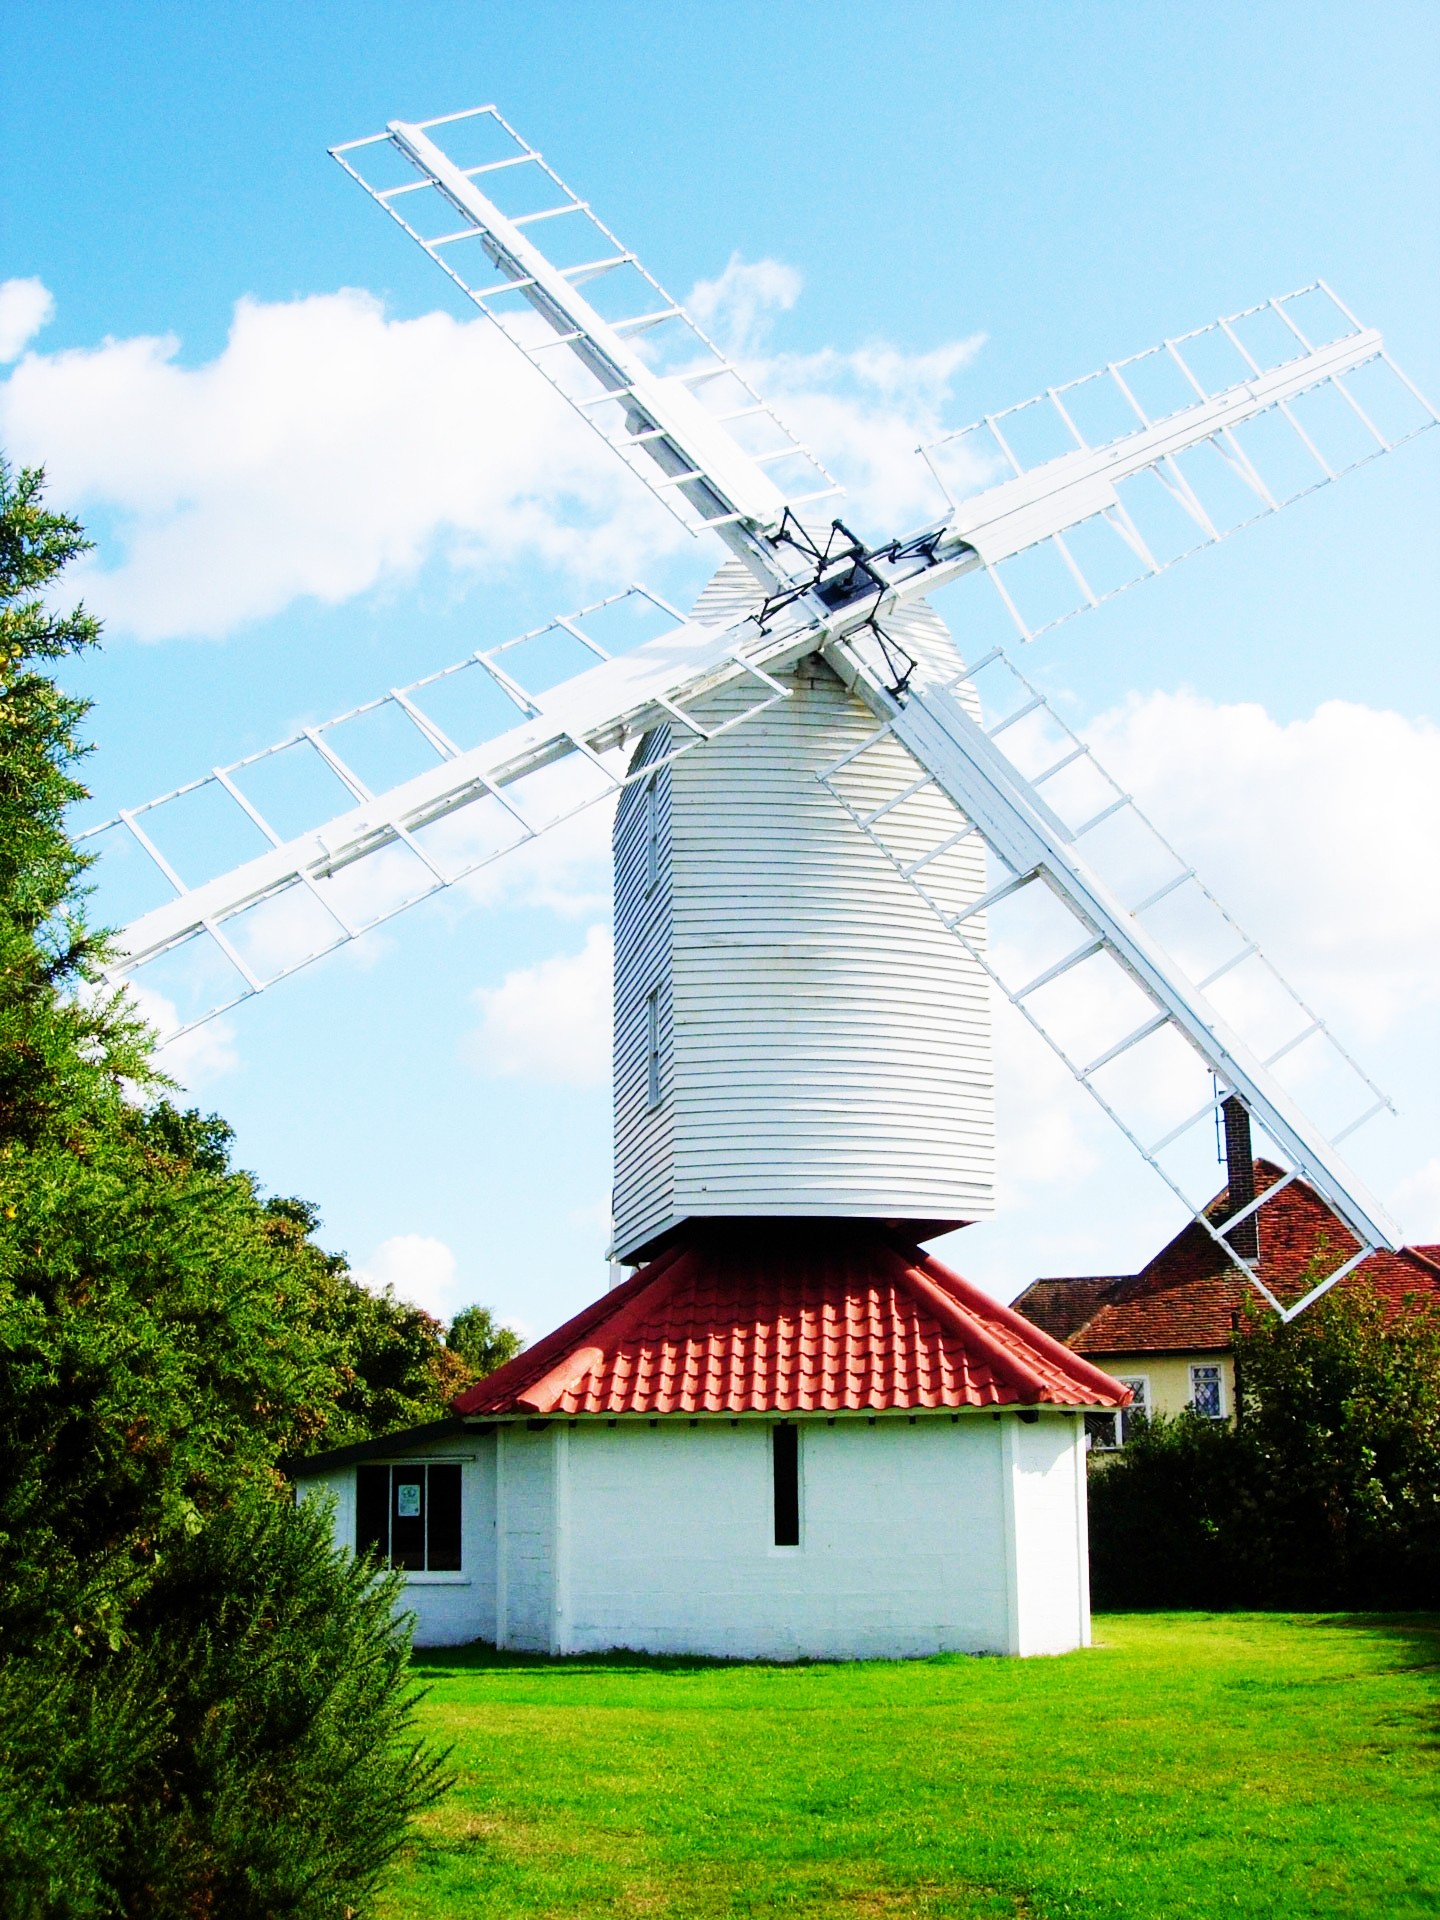 <img src="windmill.jpg" alt="windmill farm date ideas for couples in suffolk"/> 